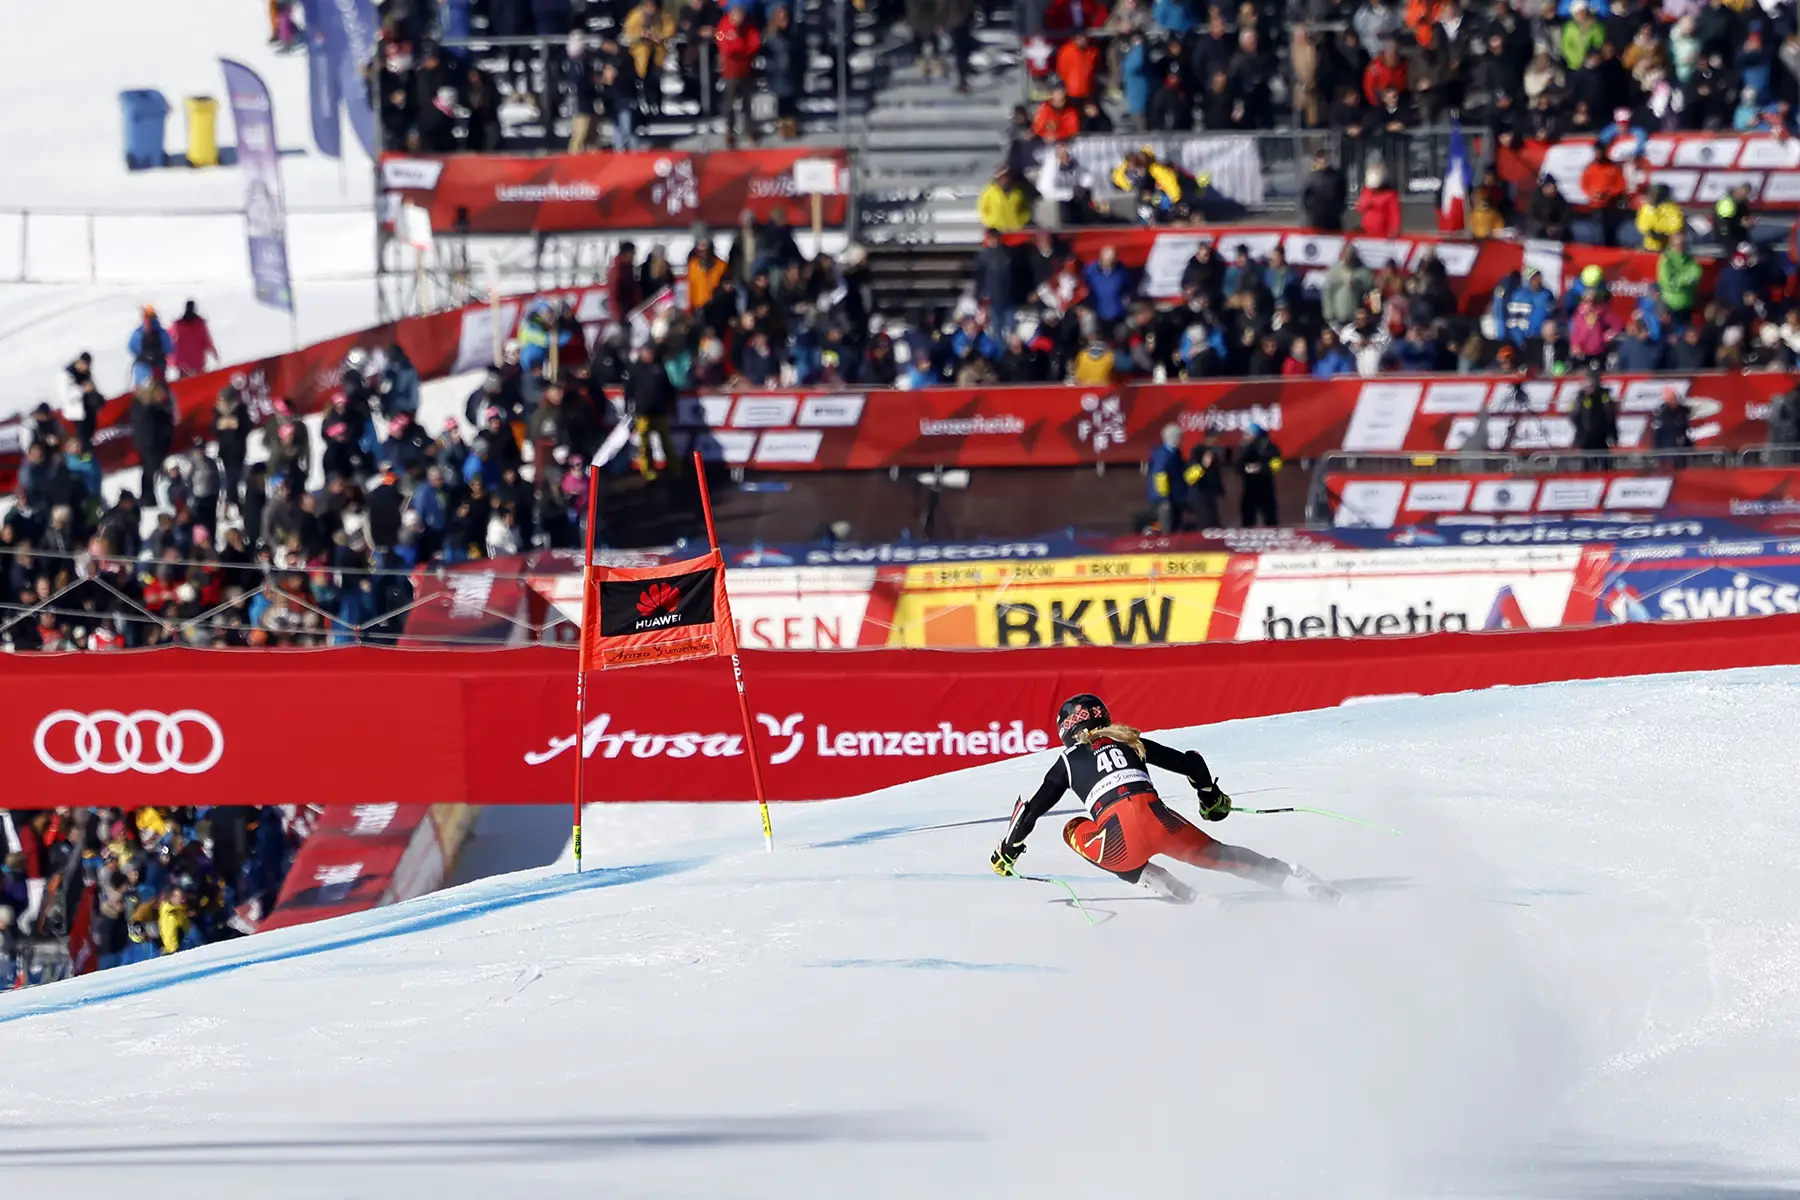 Fans watching the women's super-G at a 2022 Alpine Skiing World Cup event in Lenzerheide, Switzerland